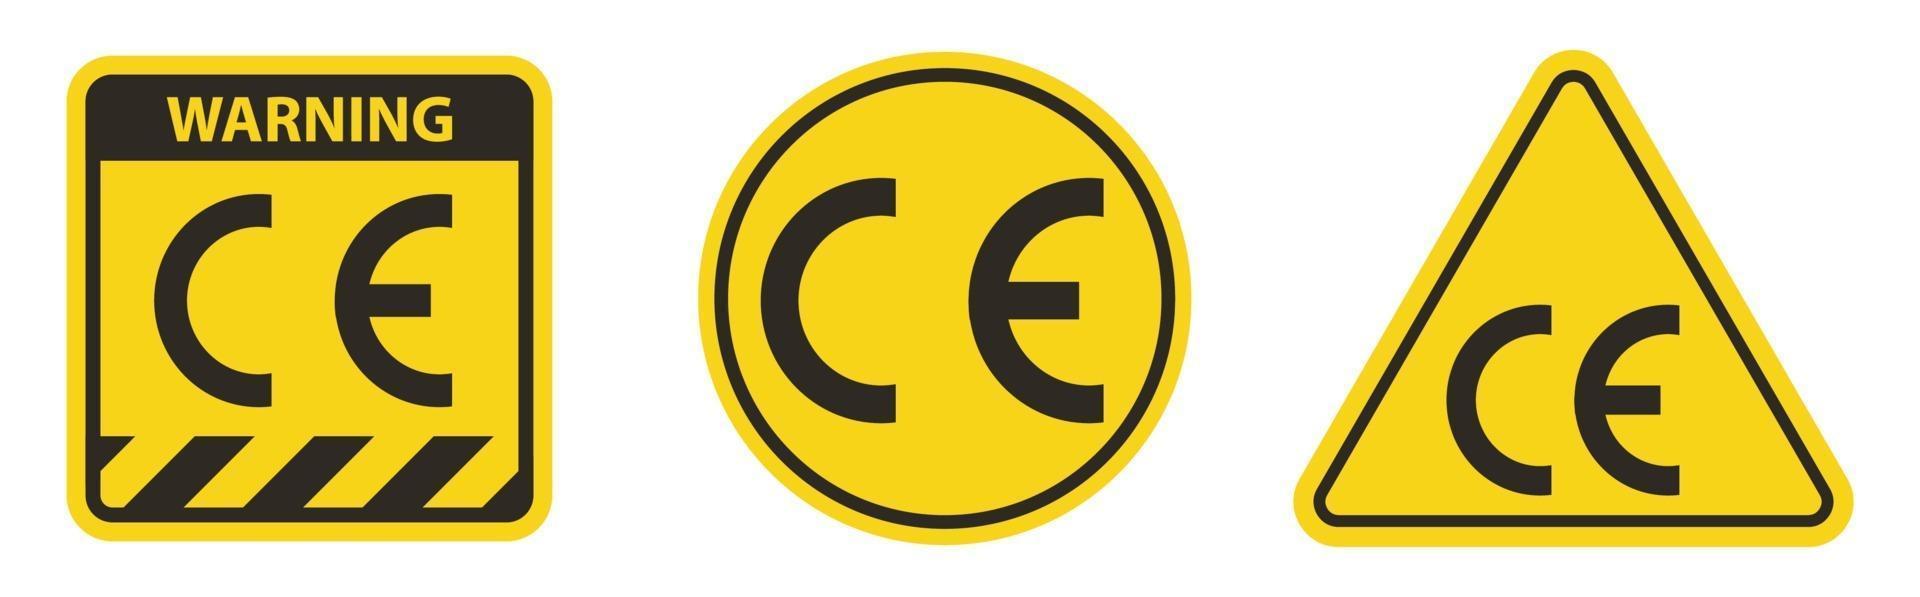 CE Mark Symbol Sign On White Background vector